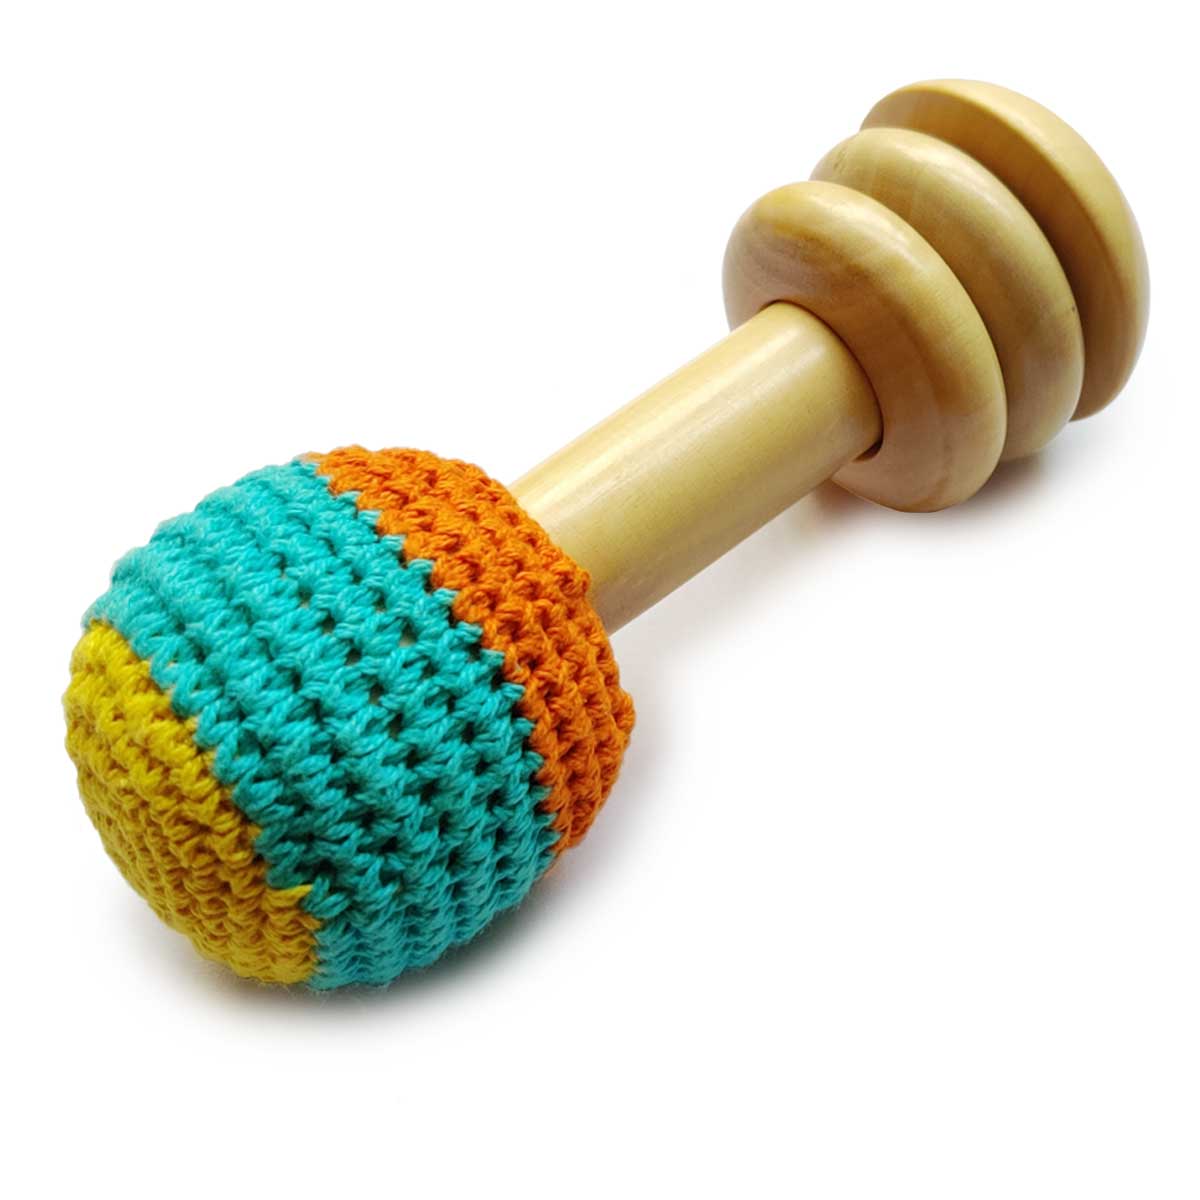 Shumee Wooden Non-Toxic Crochet Shaker Rattle Toy- ORANGE - DTM-IN-IHD-CS-W-0yr-0018